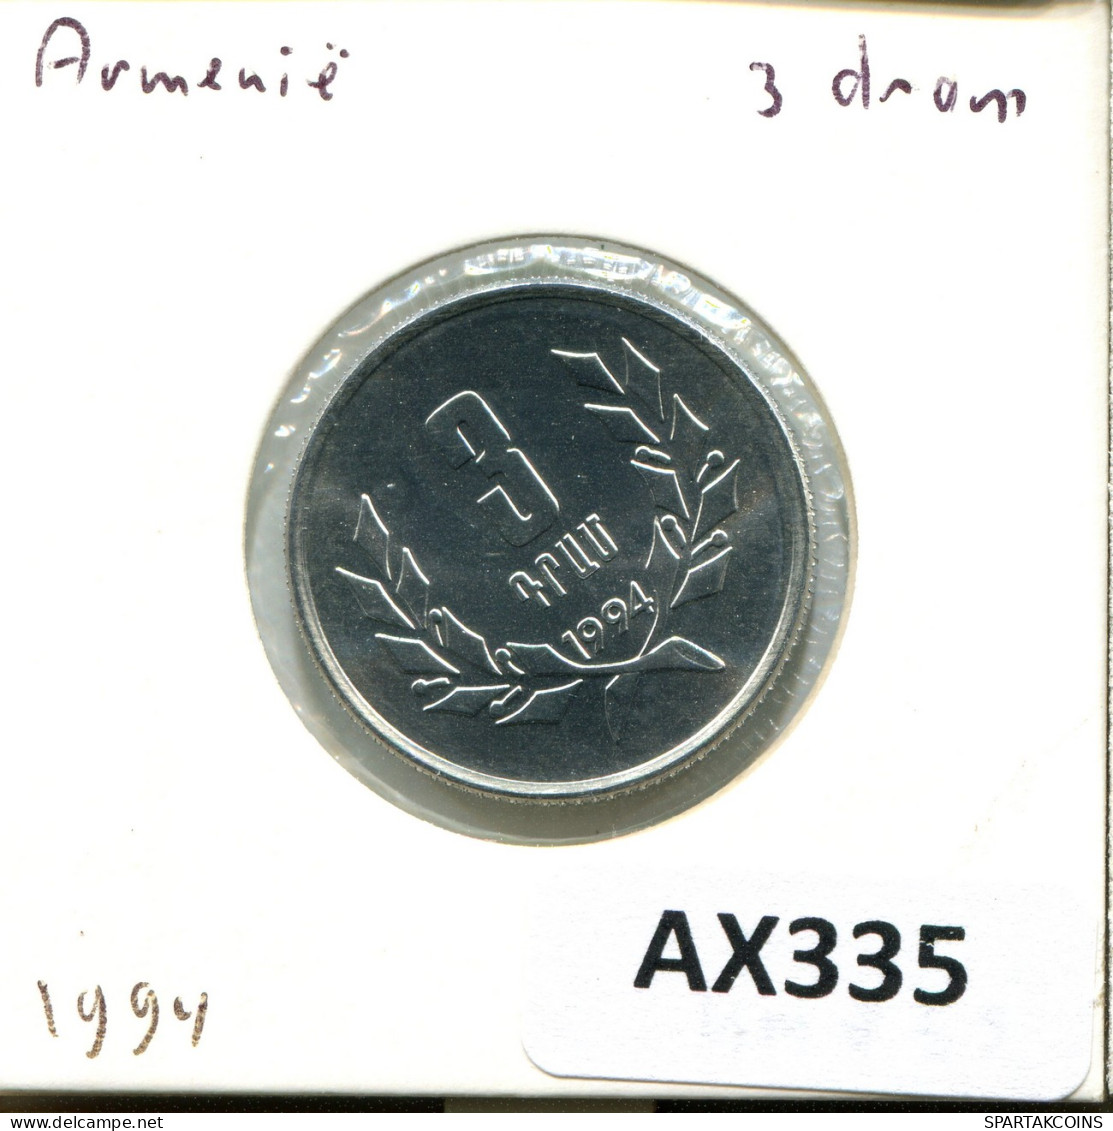 3 DRAM 1994 ARMENIA Moneda #AX335.E - Armenien